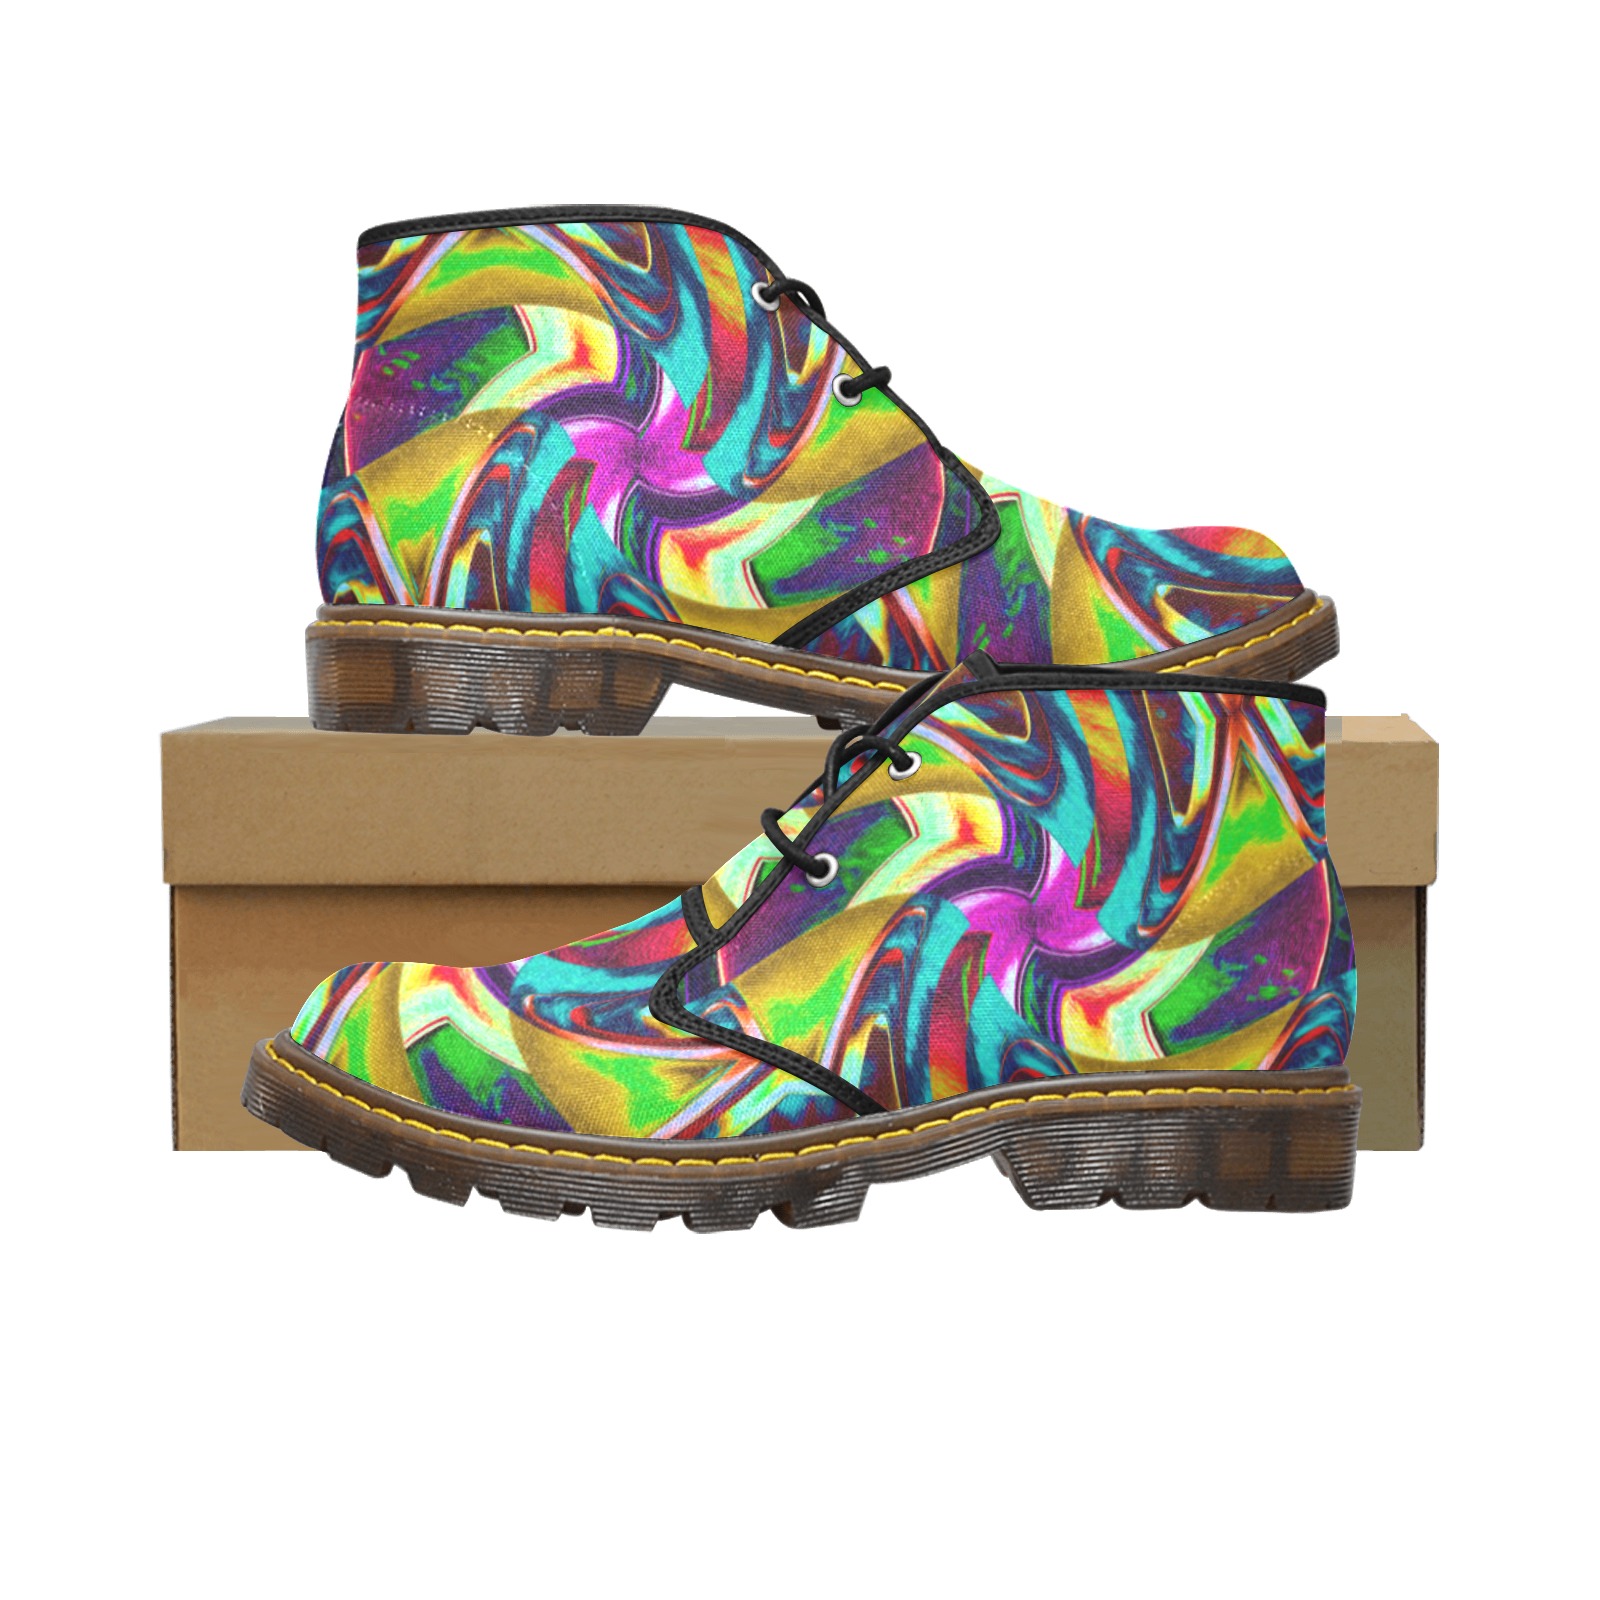 Hippie Women's Canvas Chukka Boots (Model 2402-1)